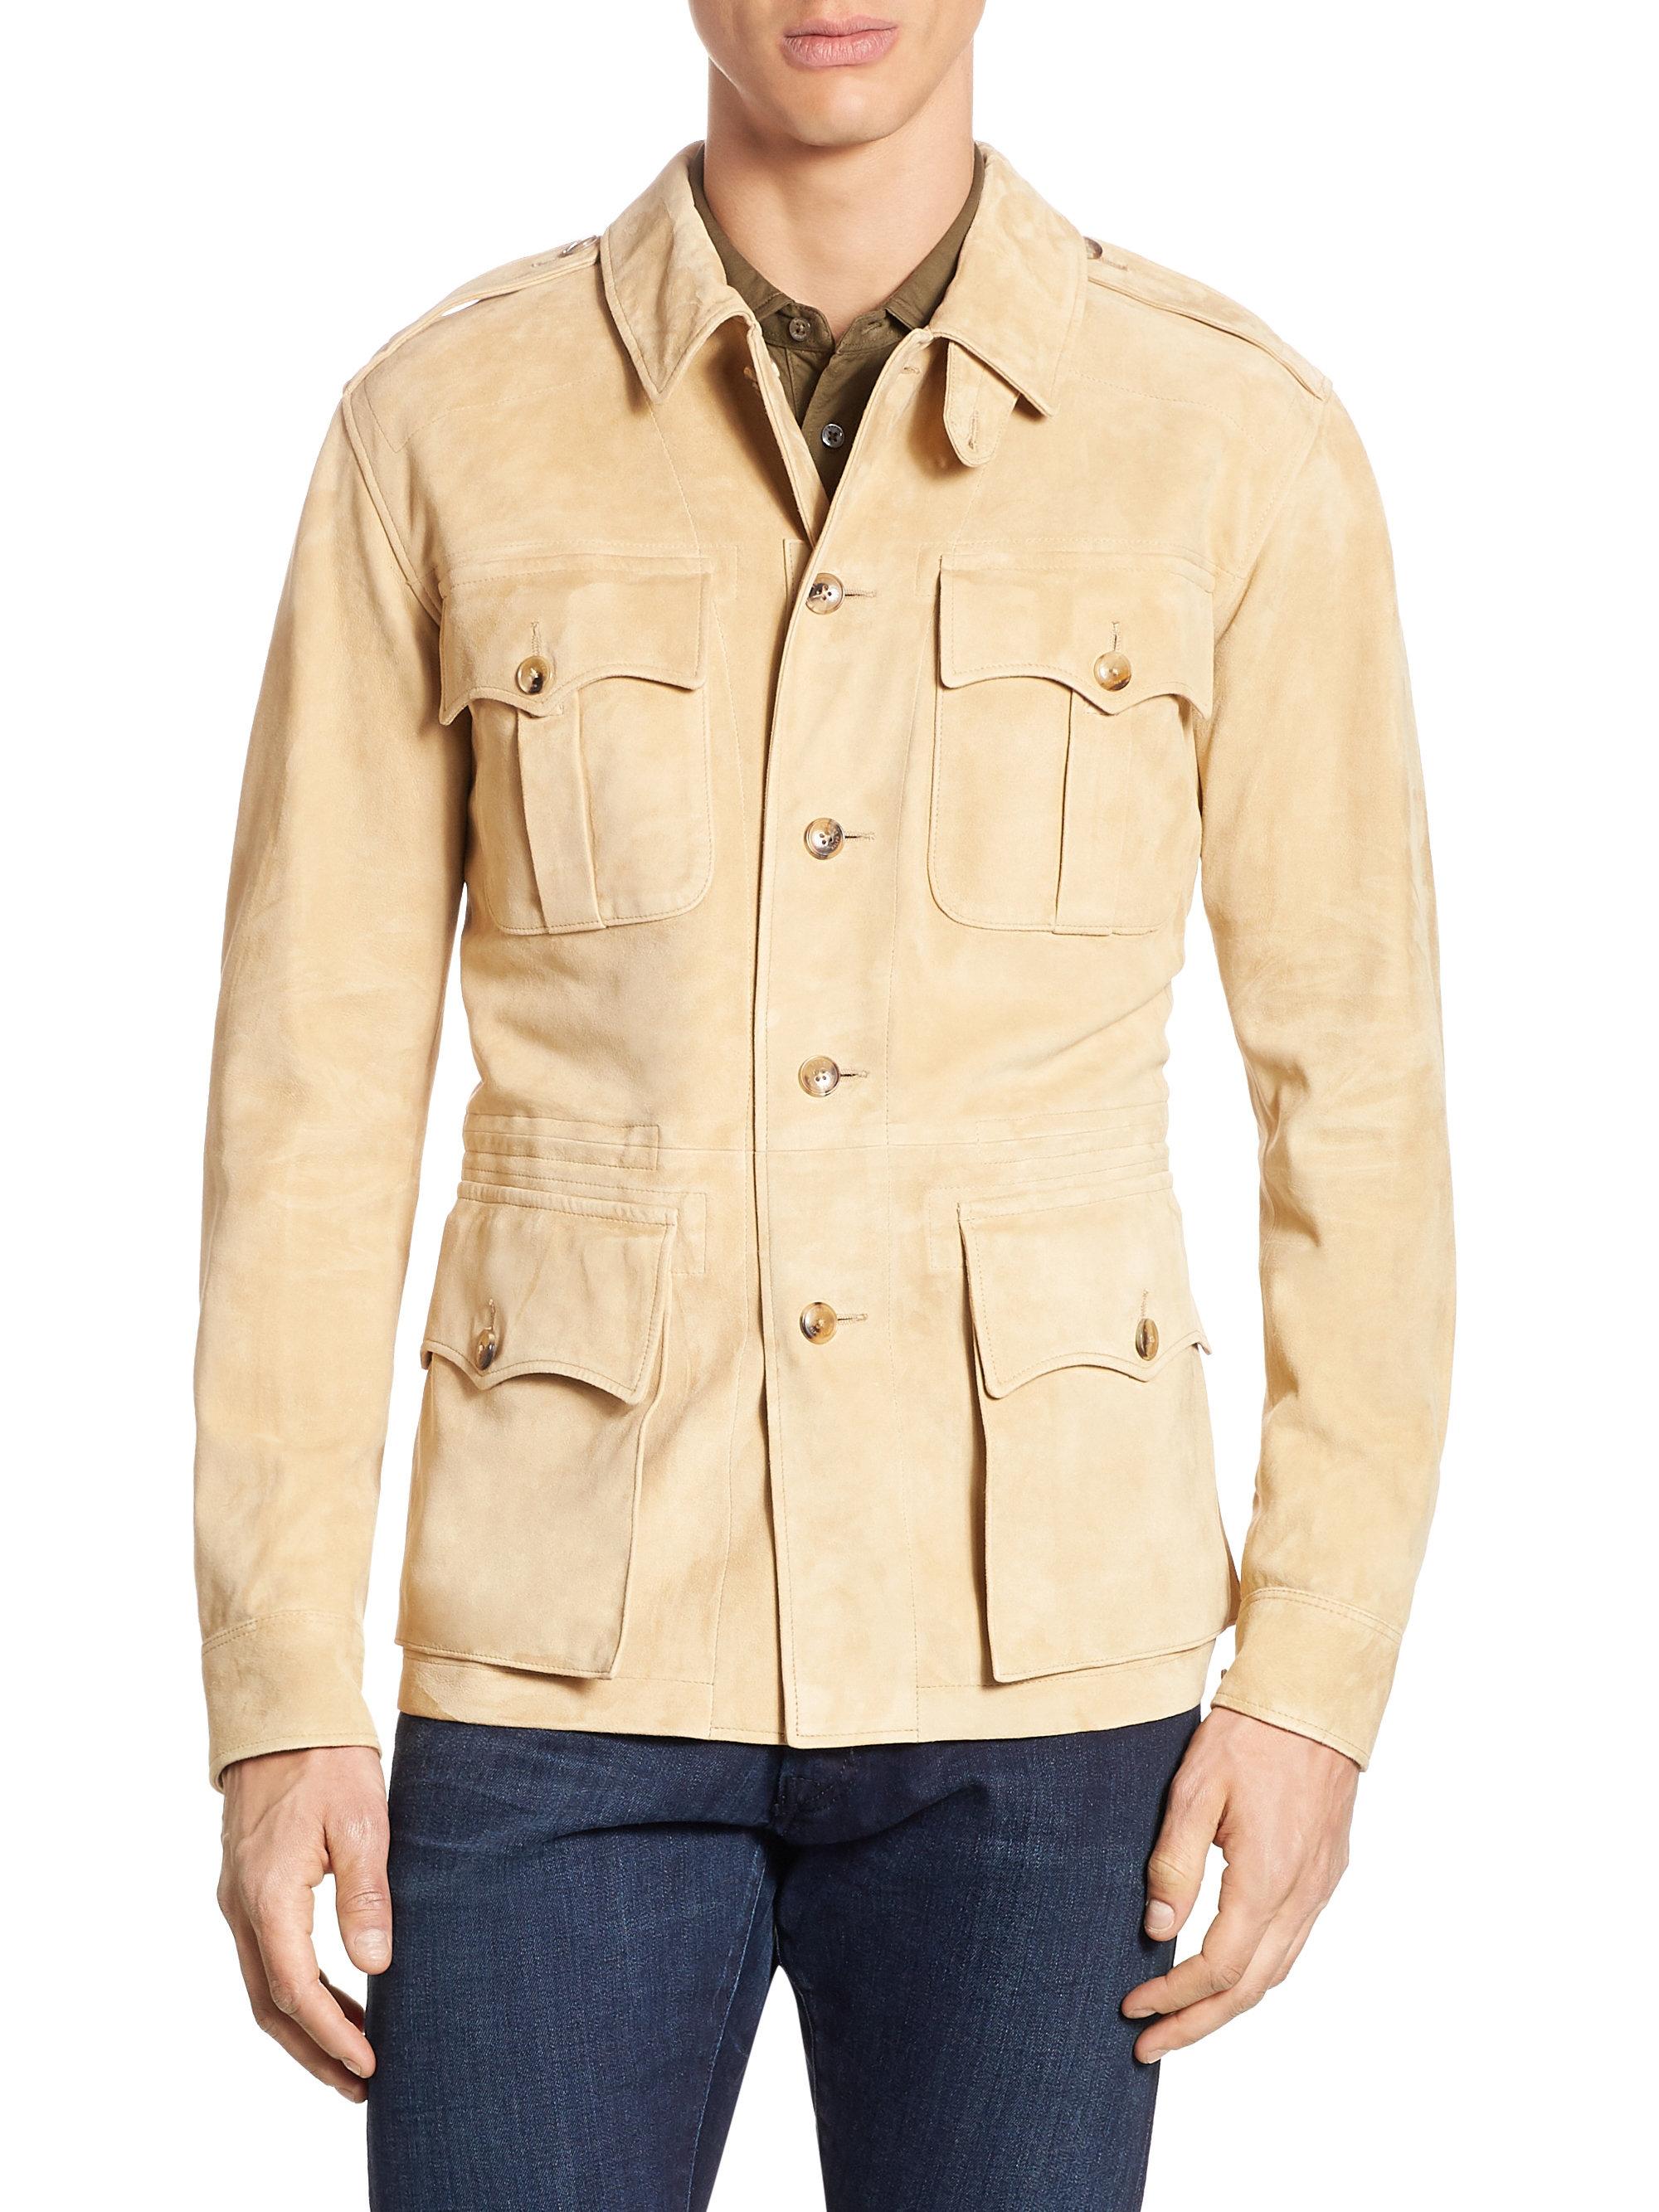 Lyst - Polo Ralph Lauren Suede Safari Jacket in Natural for Men